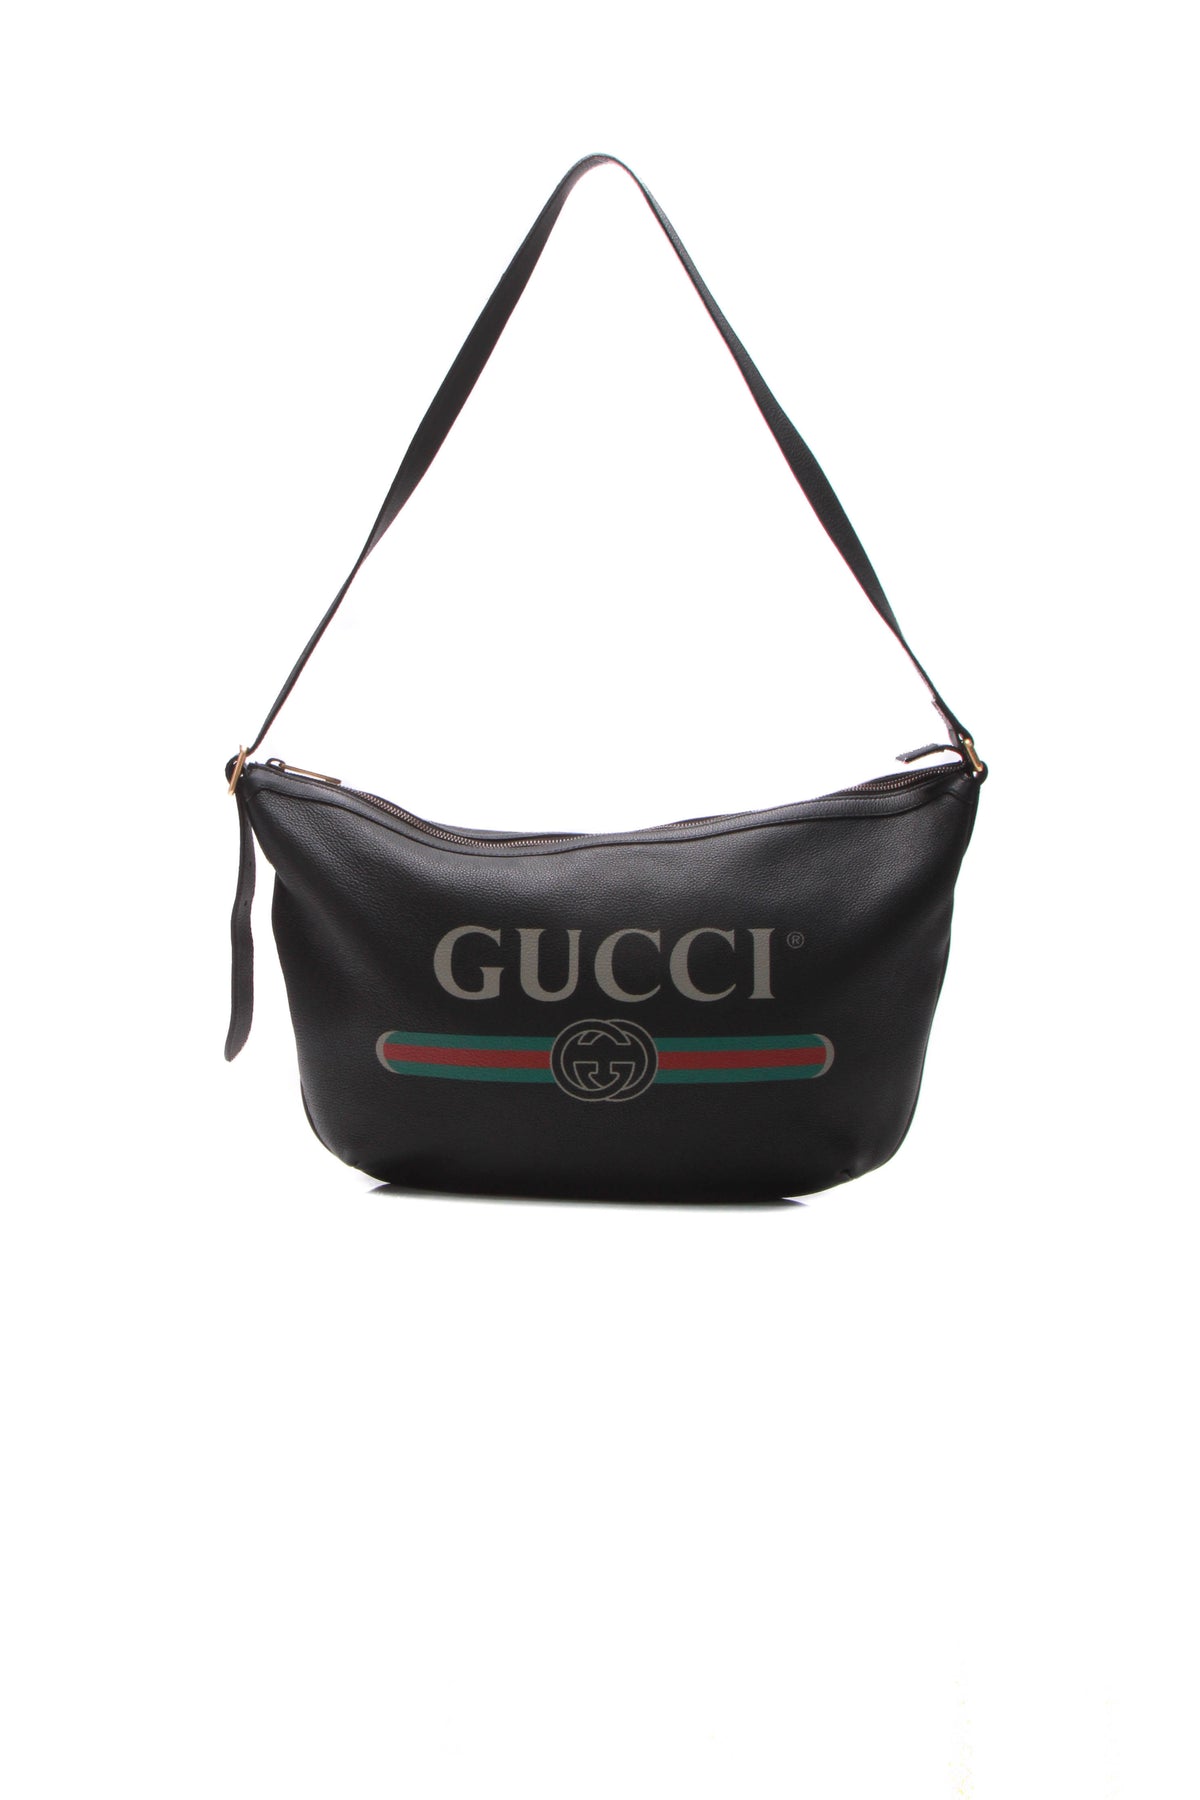 Authentic Gucci Calfskin Leather Logo Half-Moon Printed Hobo Bag